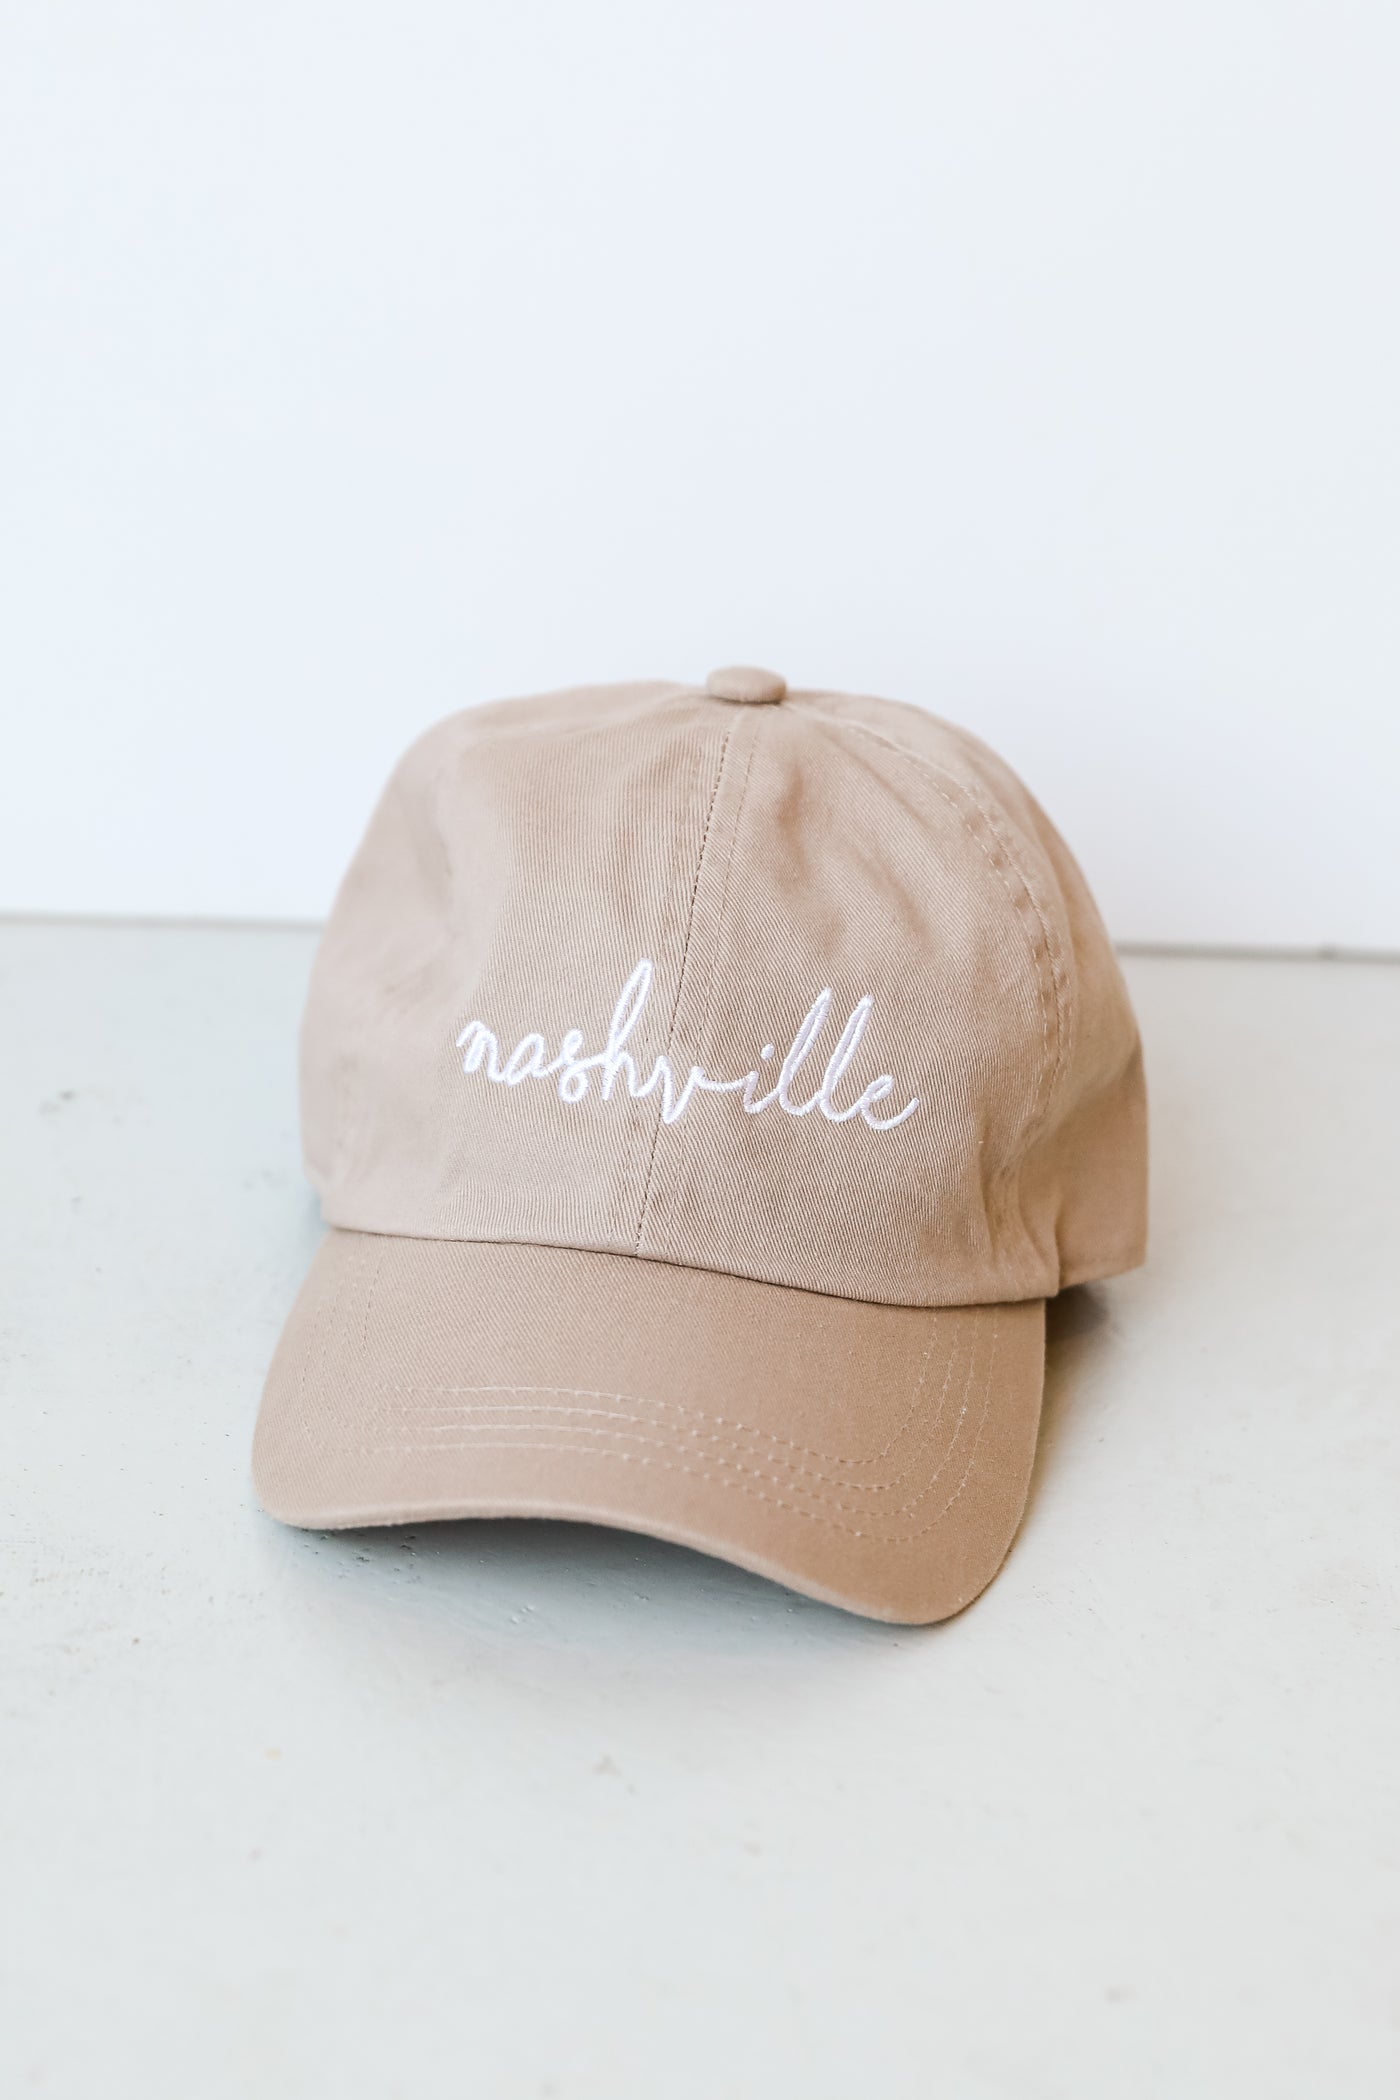 taupe Nashville Embroidered Hat